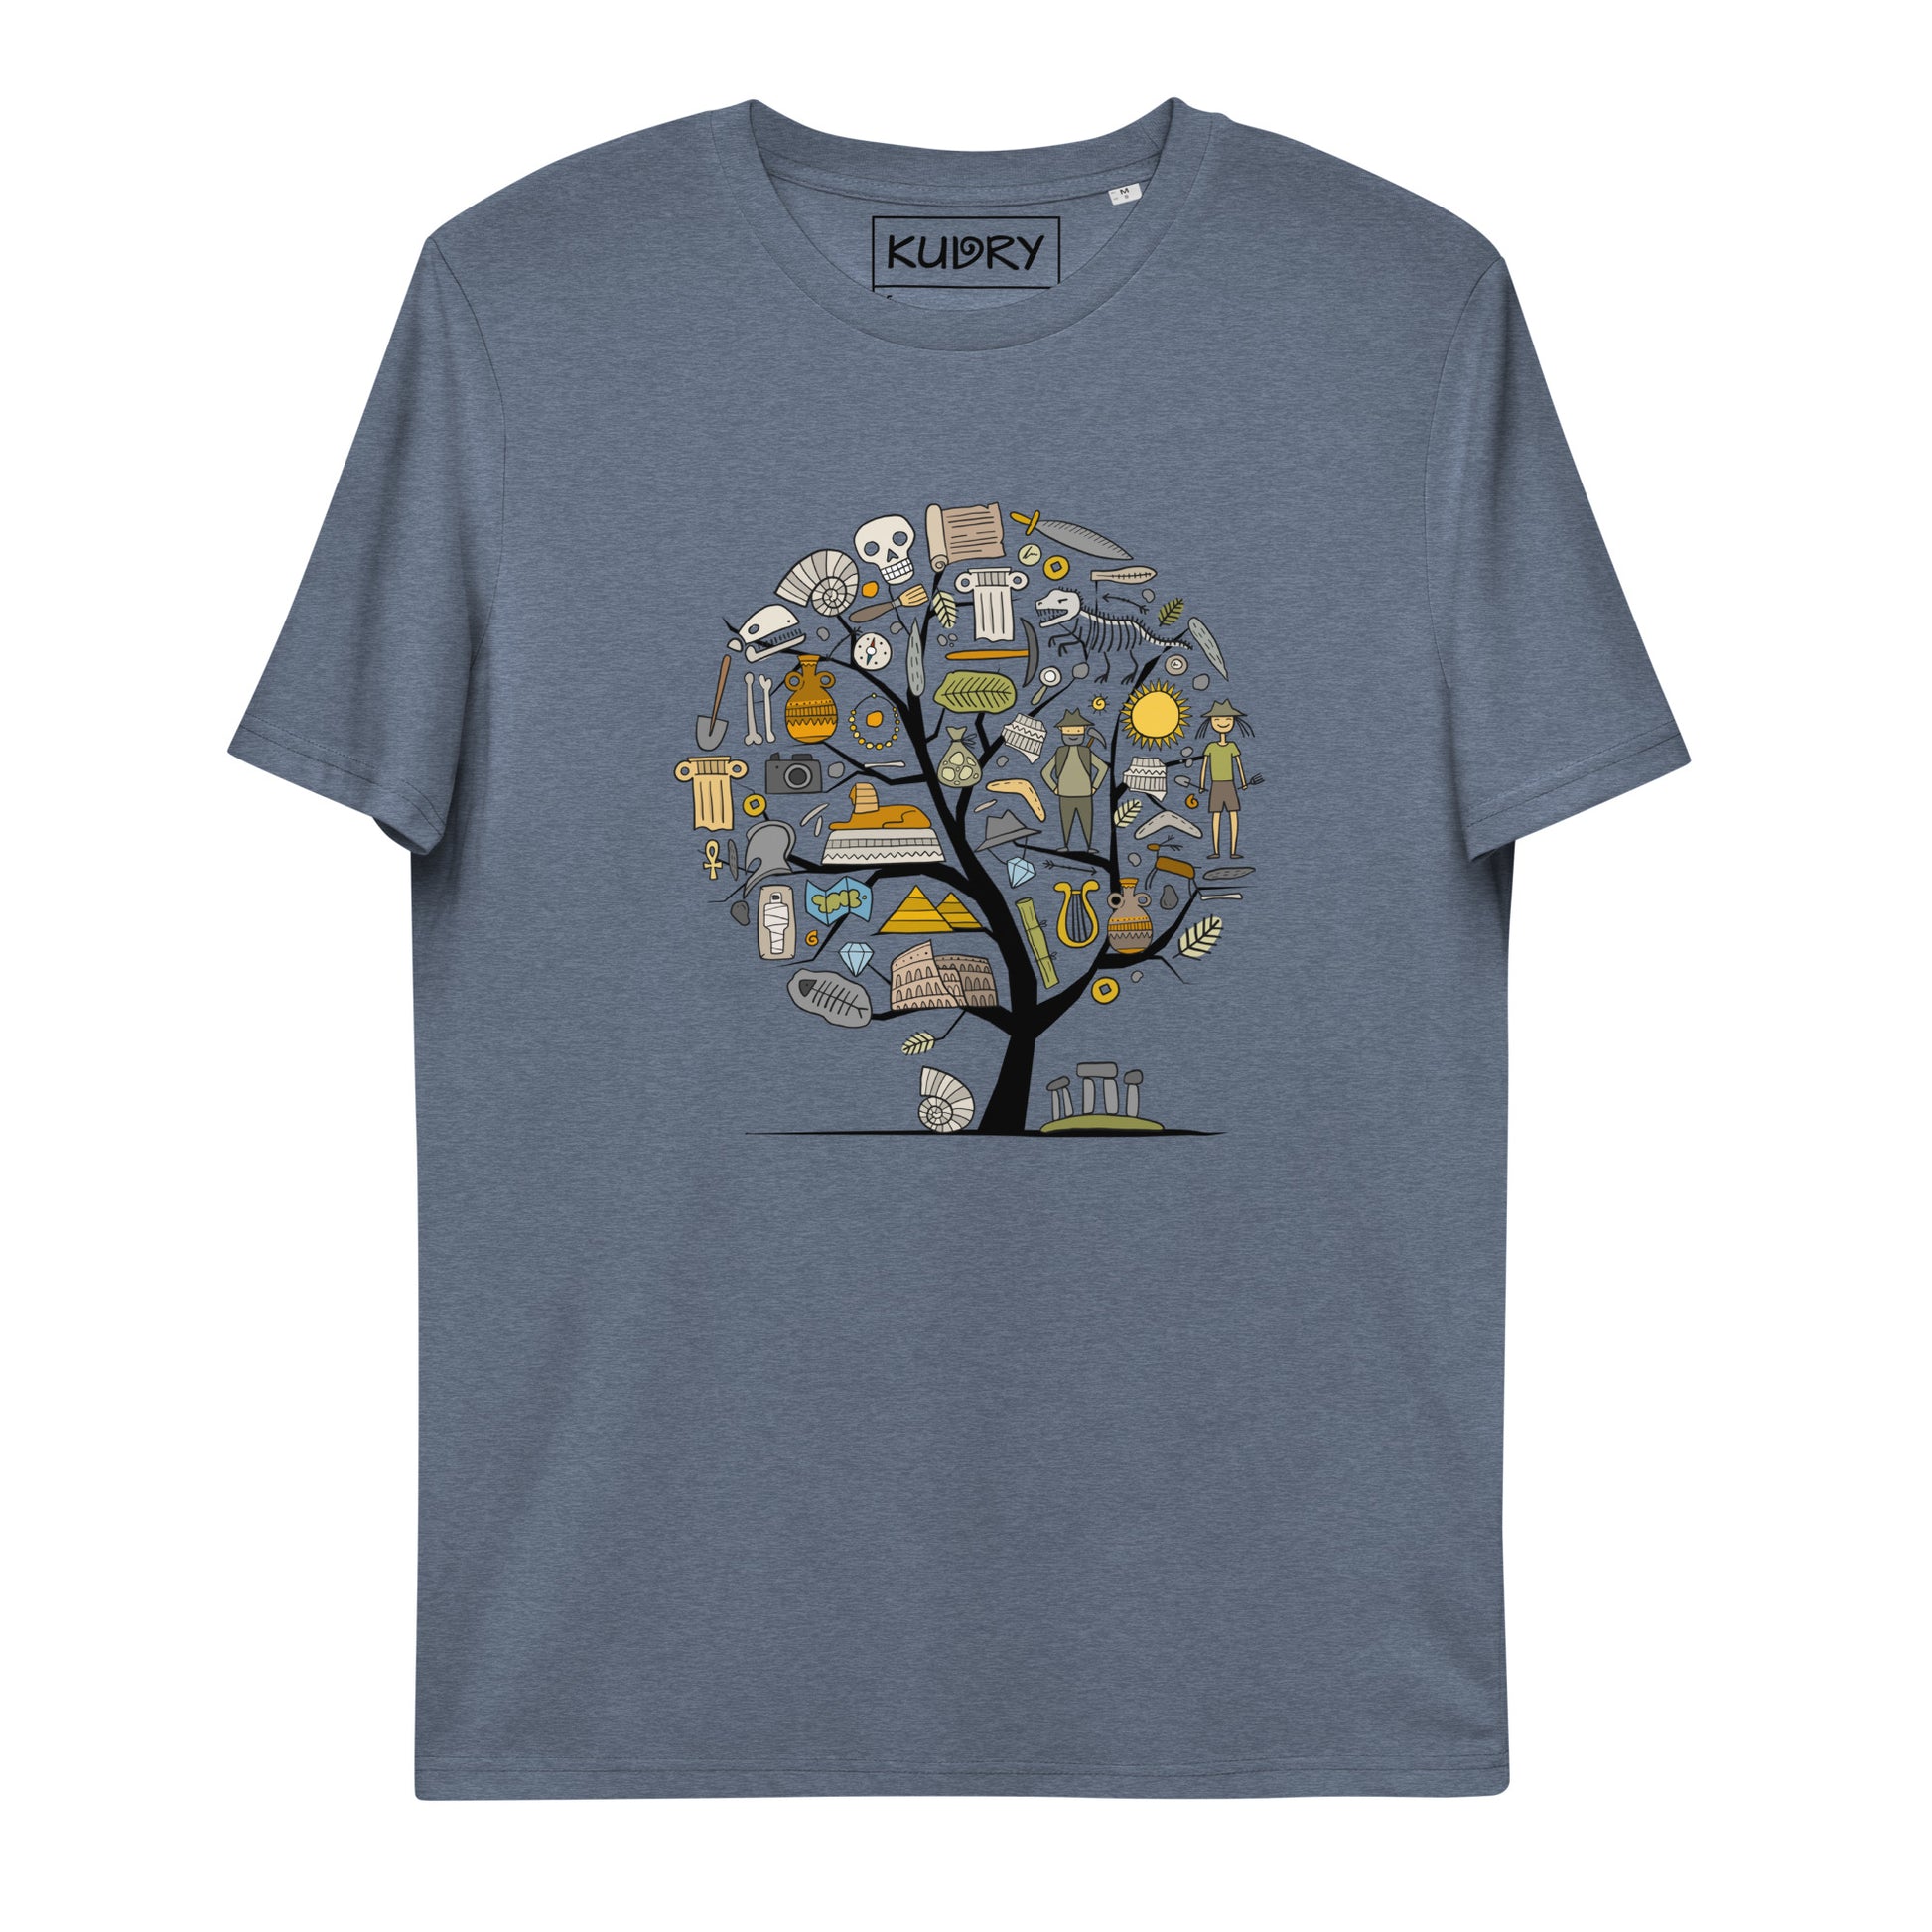 Unisex organic cotton dark blue t-shirt with Archeology designer print - concept art tree. Kudry